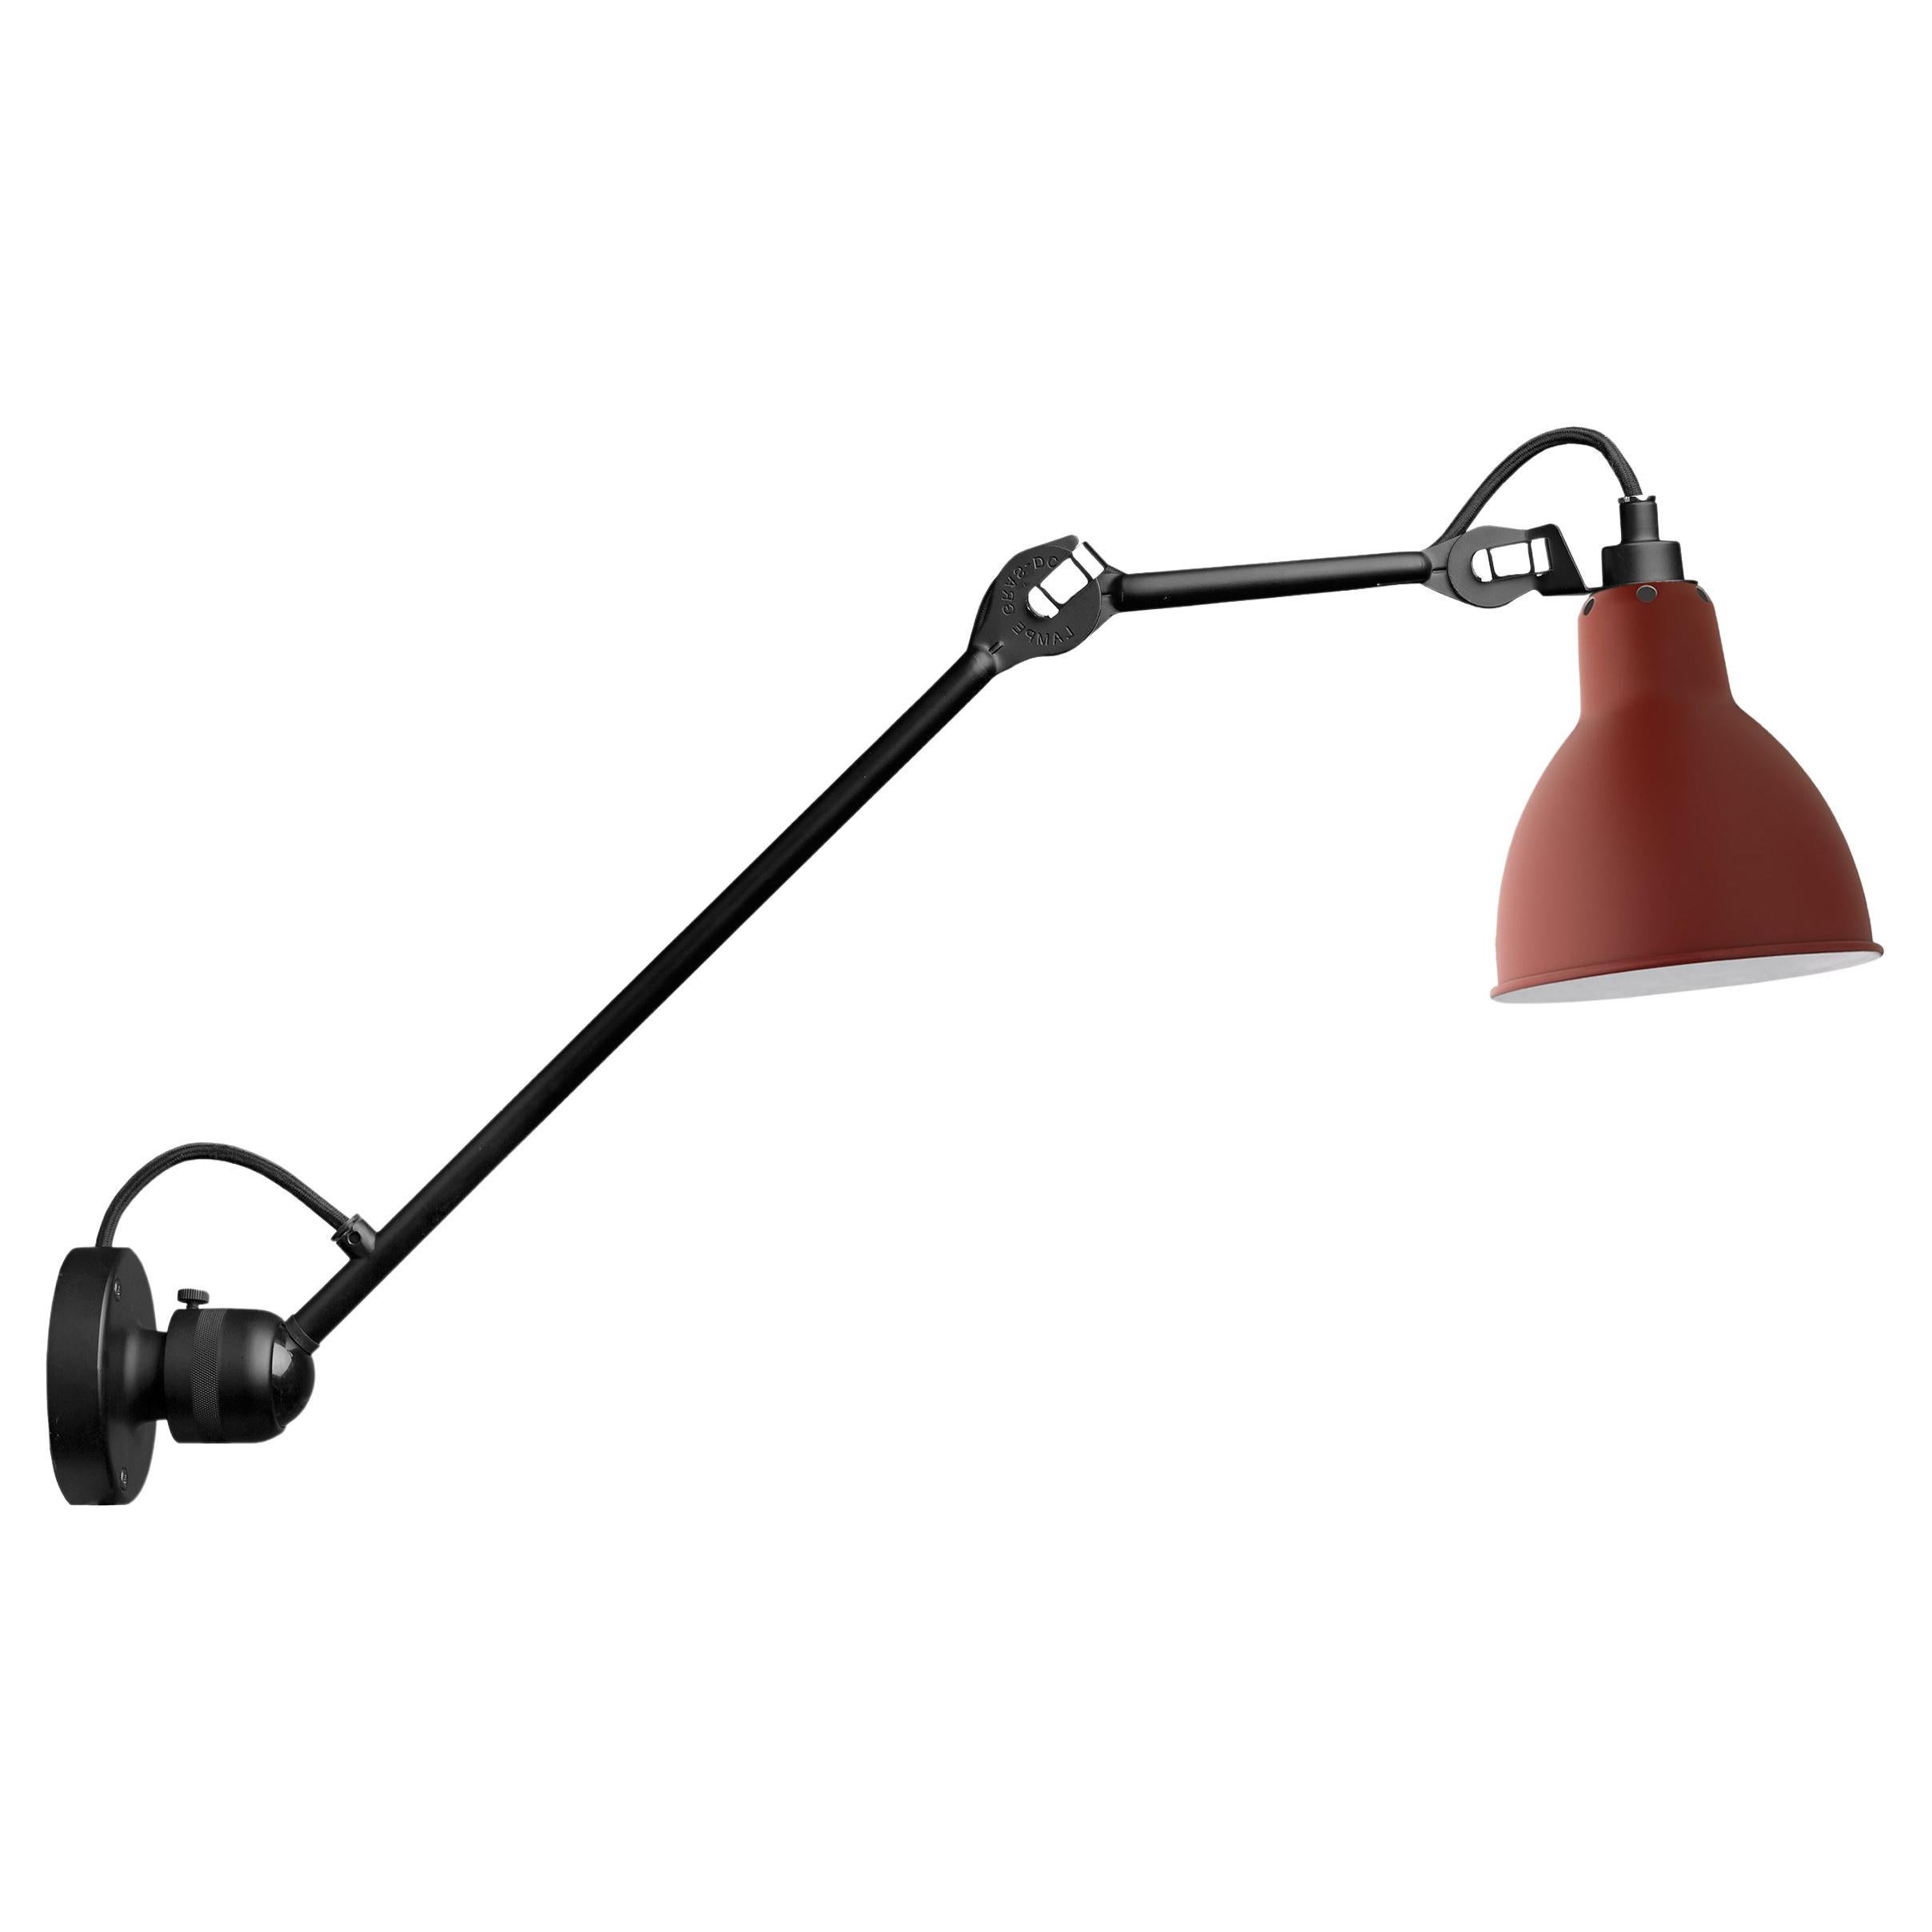 DCW Editions La Lampe Gras N°304 L40 Wandleuchte mit schwarzem Arm und rotem Lampenschirm